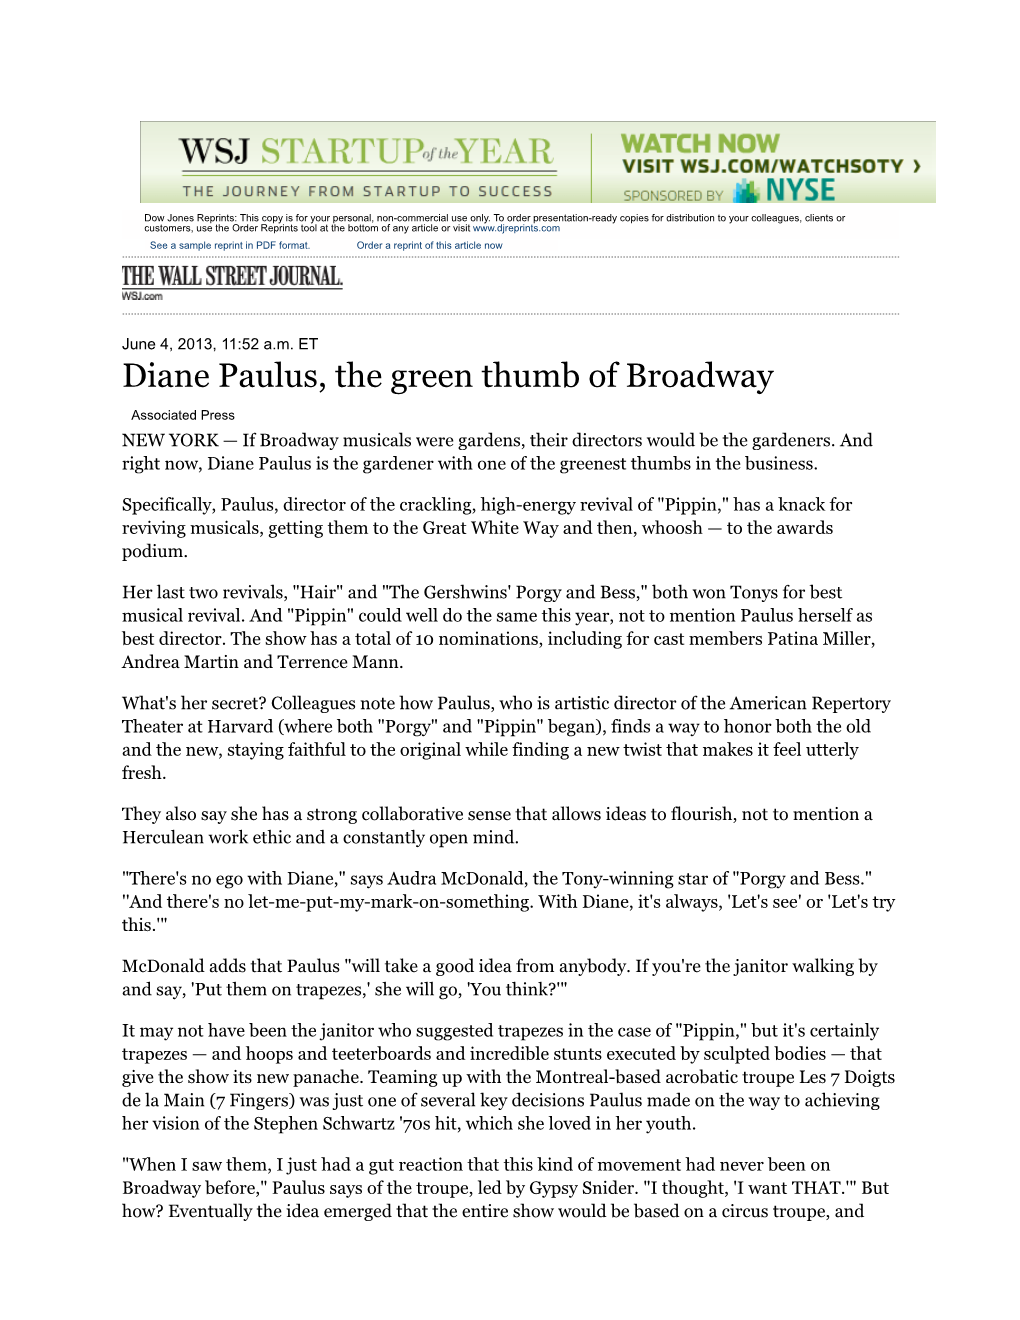 Diane Paulus, the Green Thumb of Broadway